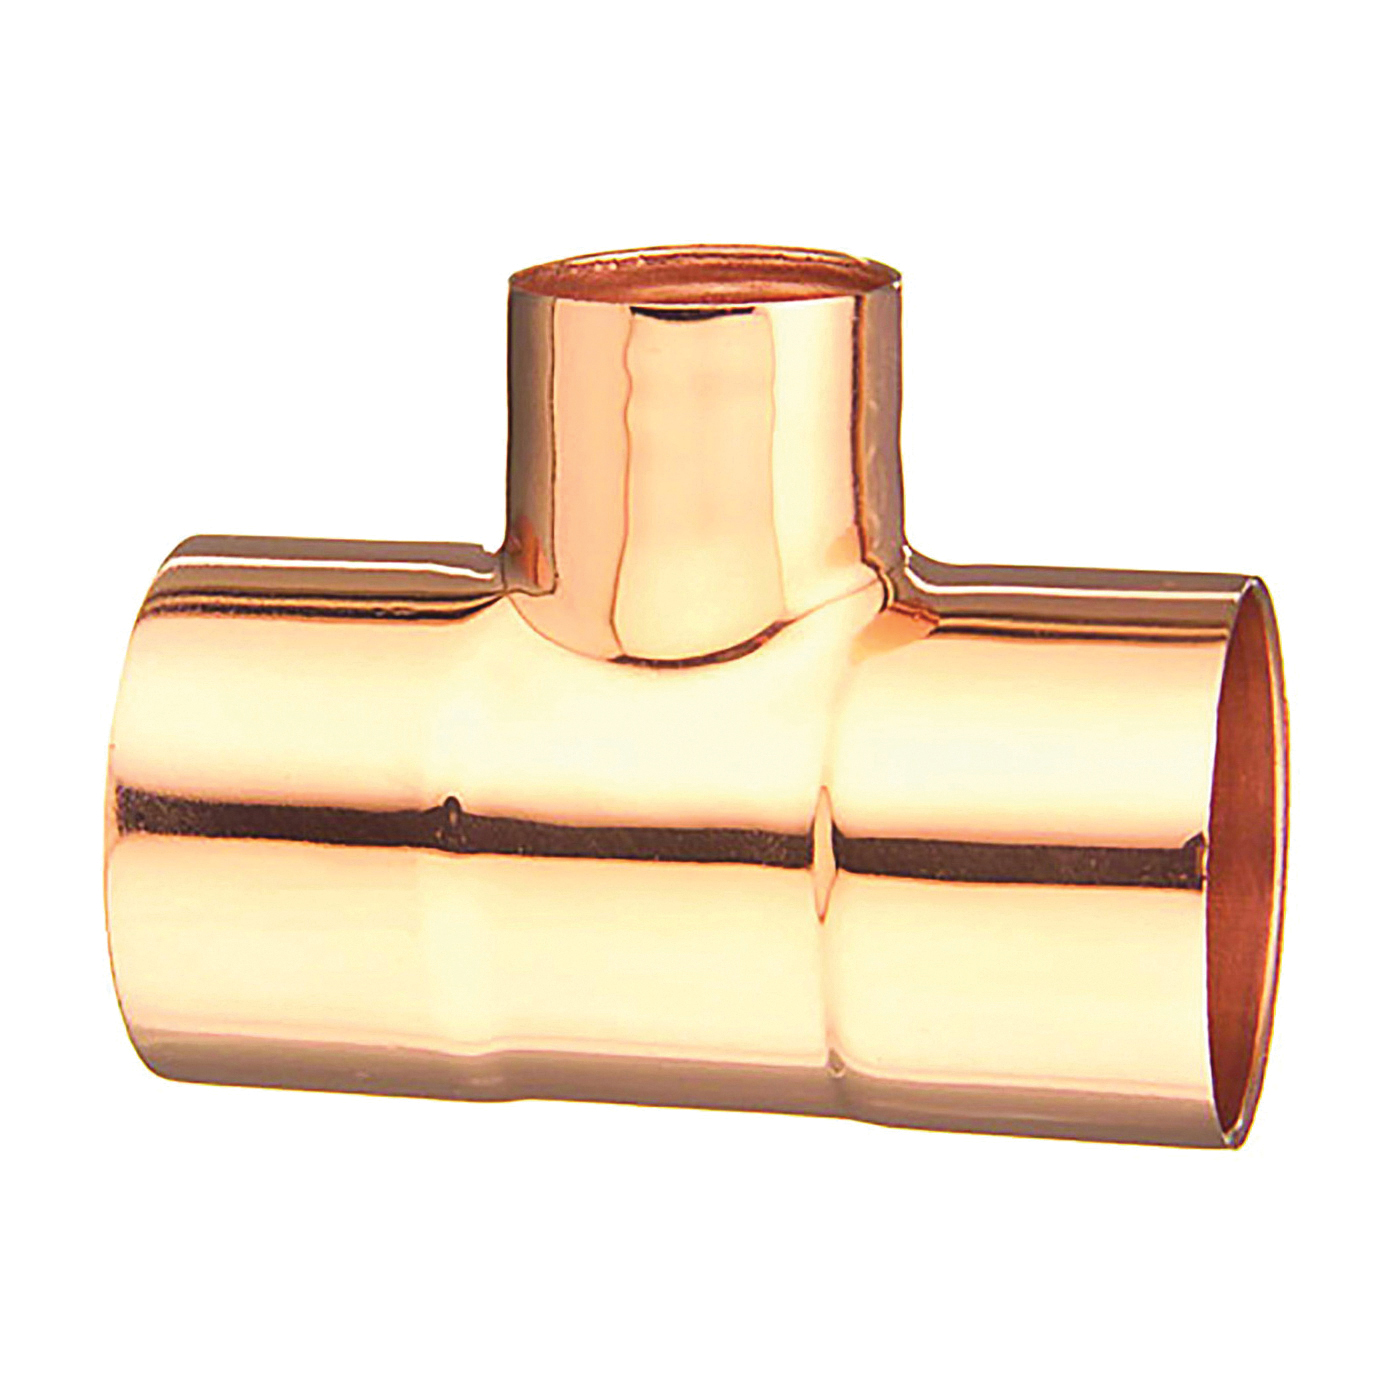 111R Series 32874 Reducing Pipe Tee, 1-1/4 x 1-1/4 x 3/4 in, Sweat, Copper